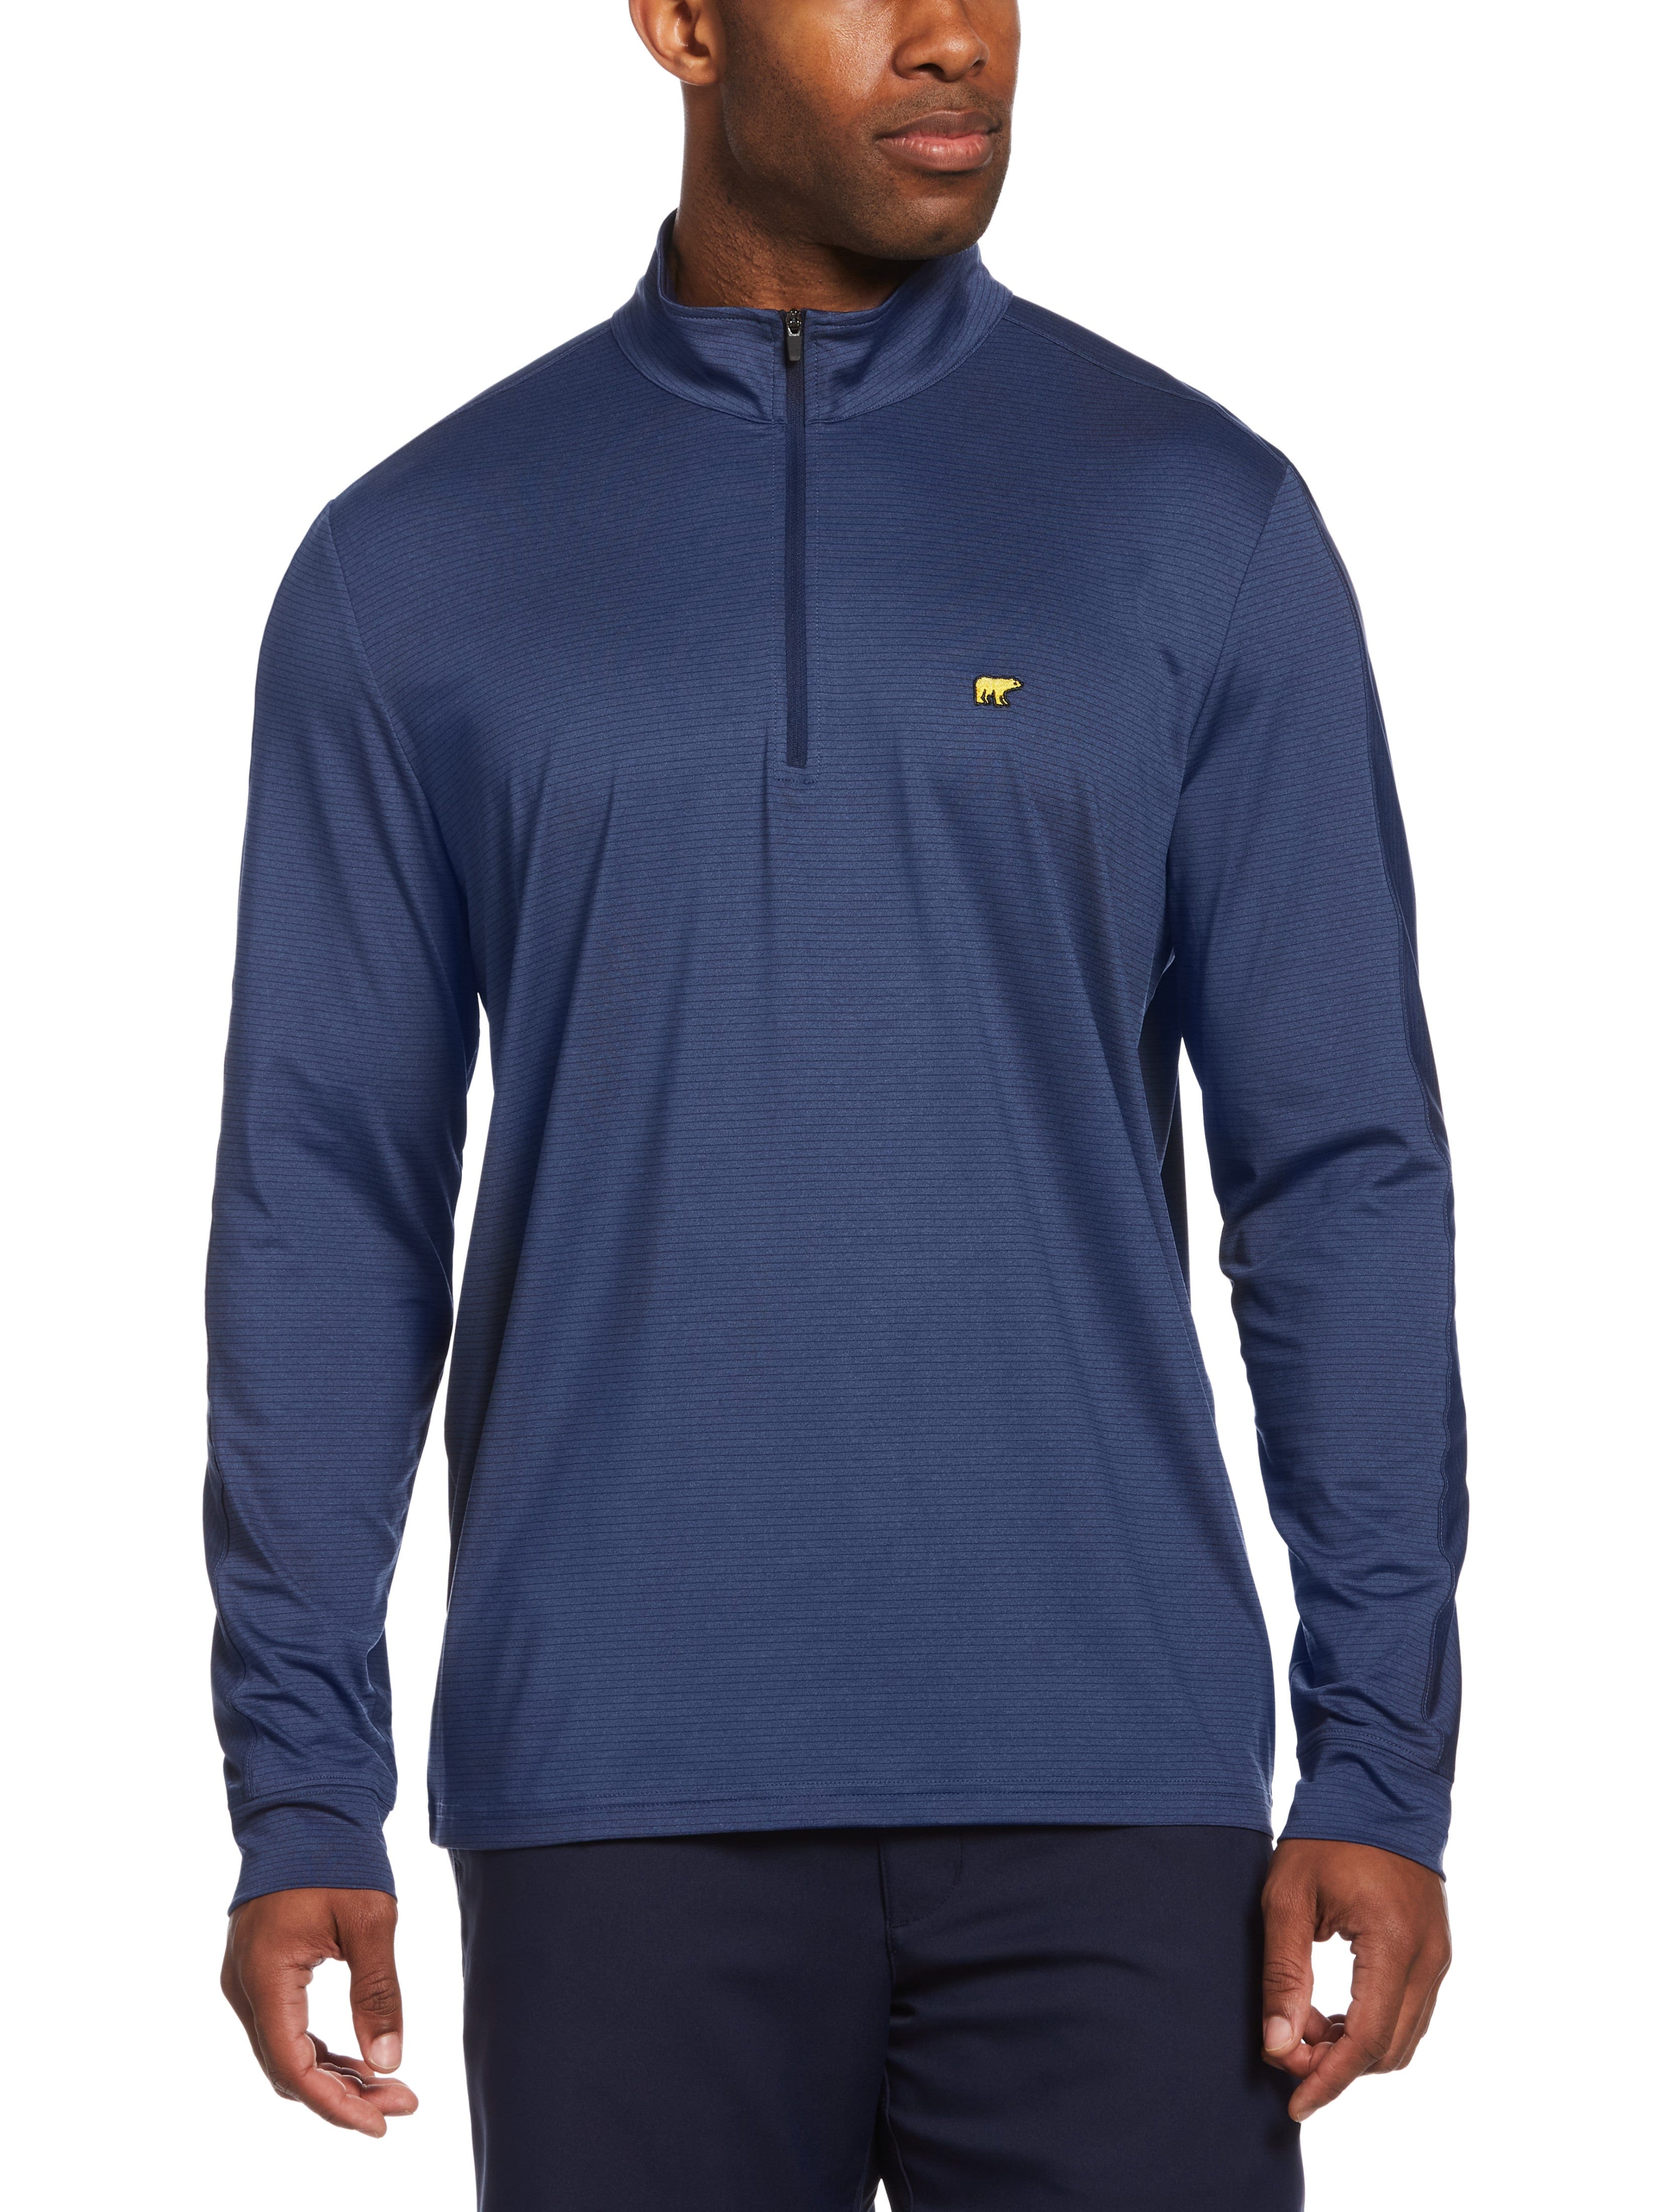 Jack Nicklaus Mens 1/4 Zip Sun Shade Base Layer Golf Shirt, Size Small, Peacoat Heather Brown, Polyester/Elastane | Golf Apparel Shop